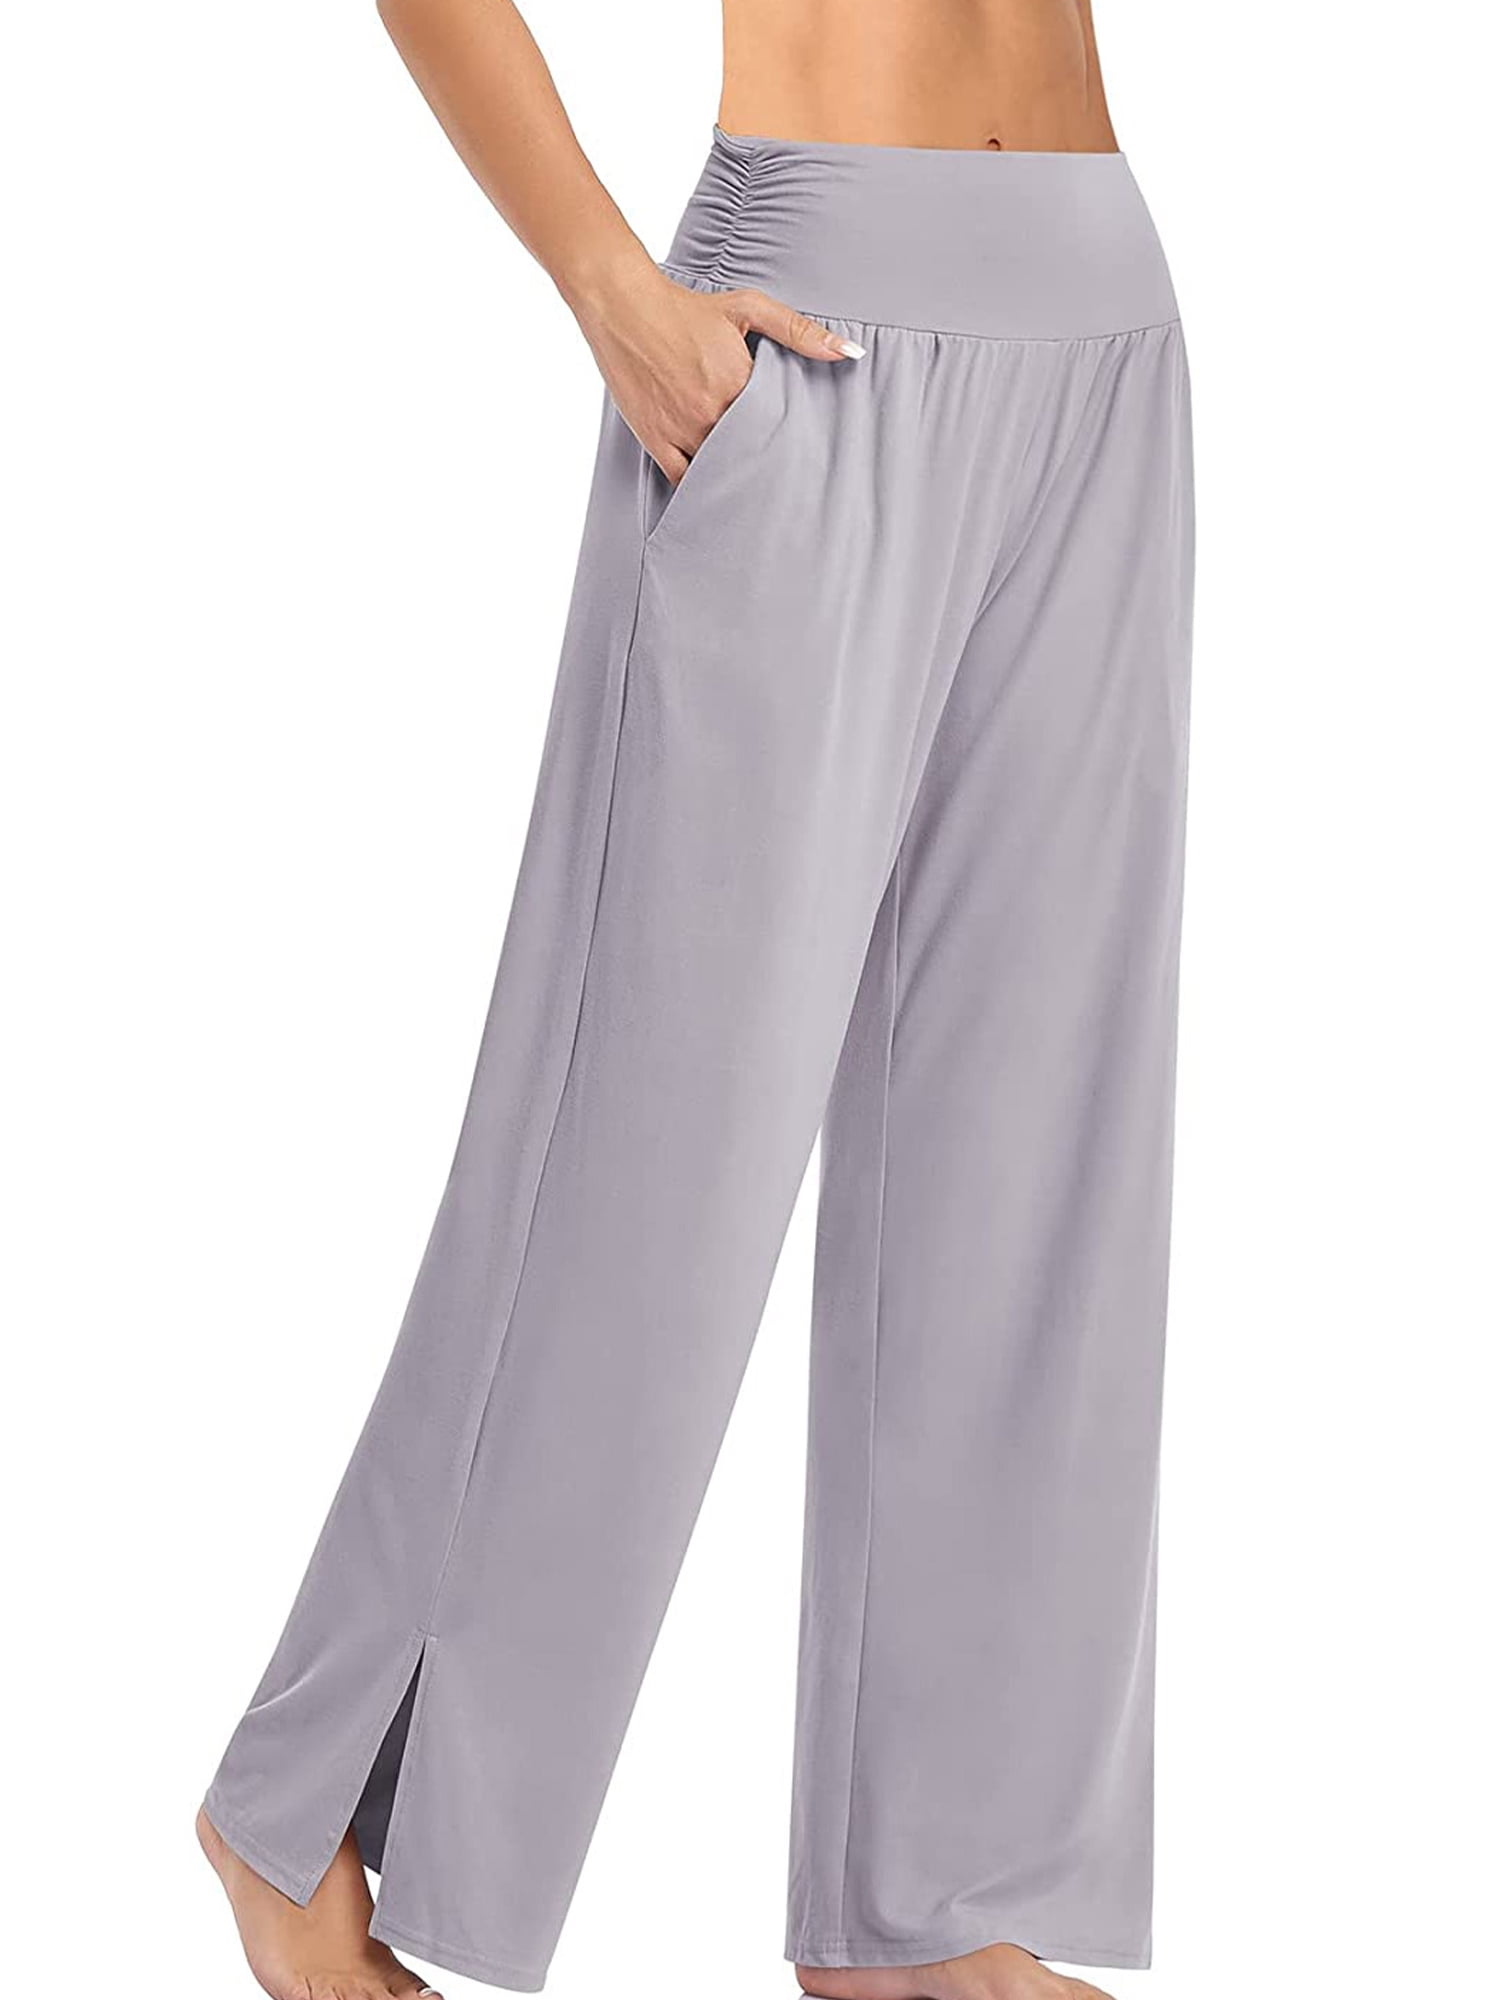 Cindysus Women Solid Color Sweatpants High Waist Long Trousers Pants ...